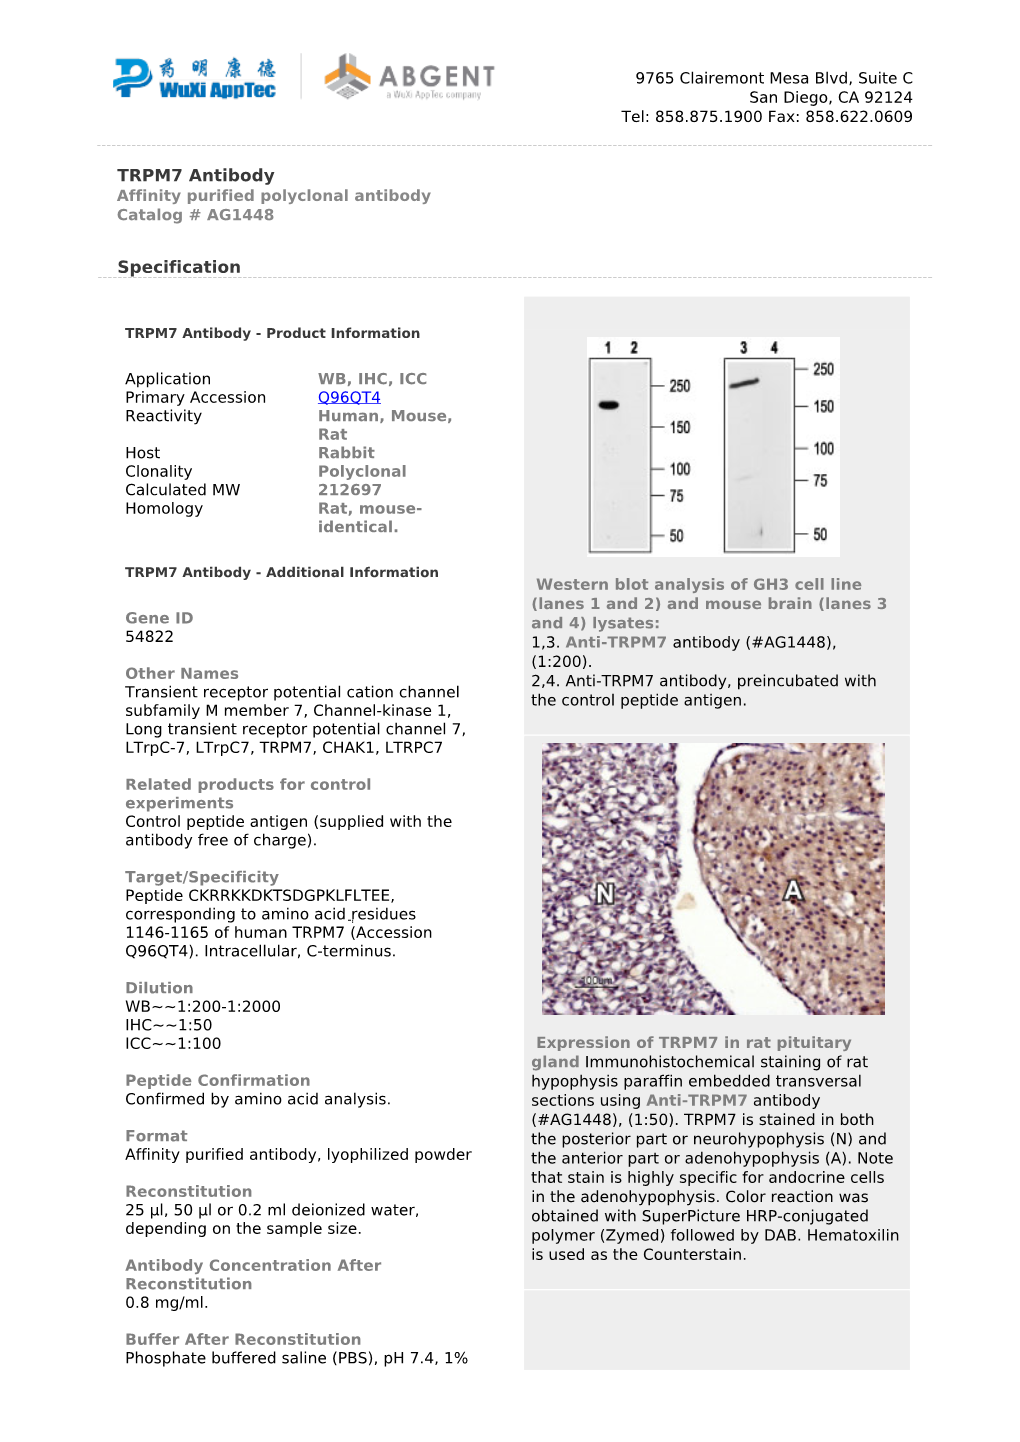 TRPM7 Antibody Affinity Purified Polyclonal Antibody Catalog # AG1448